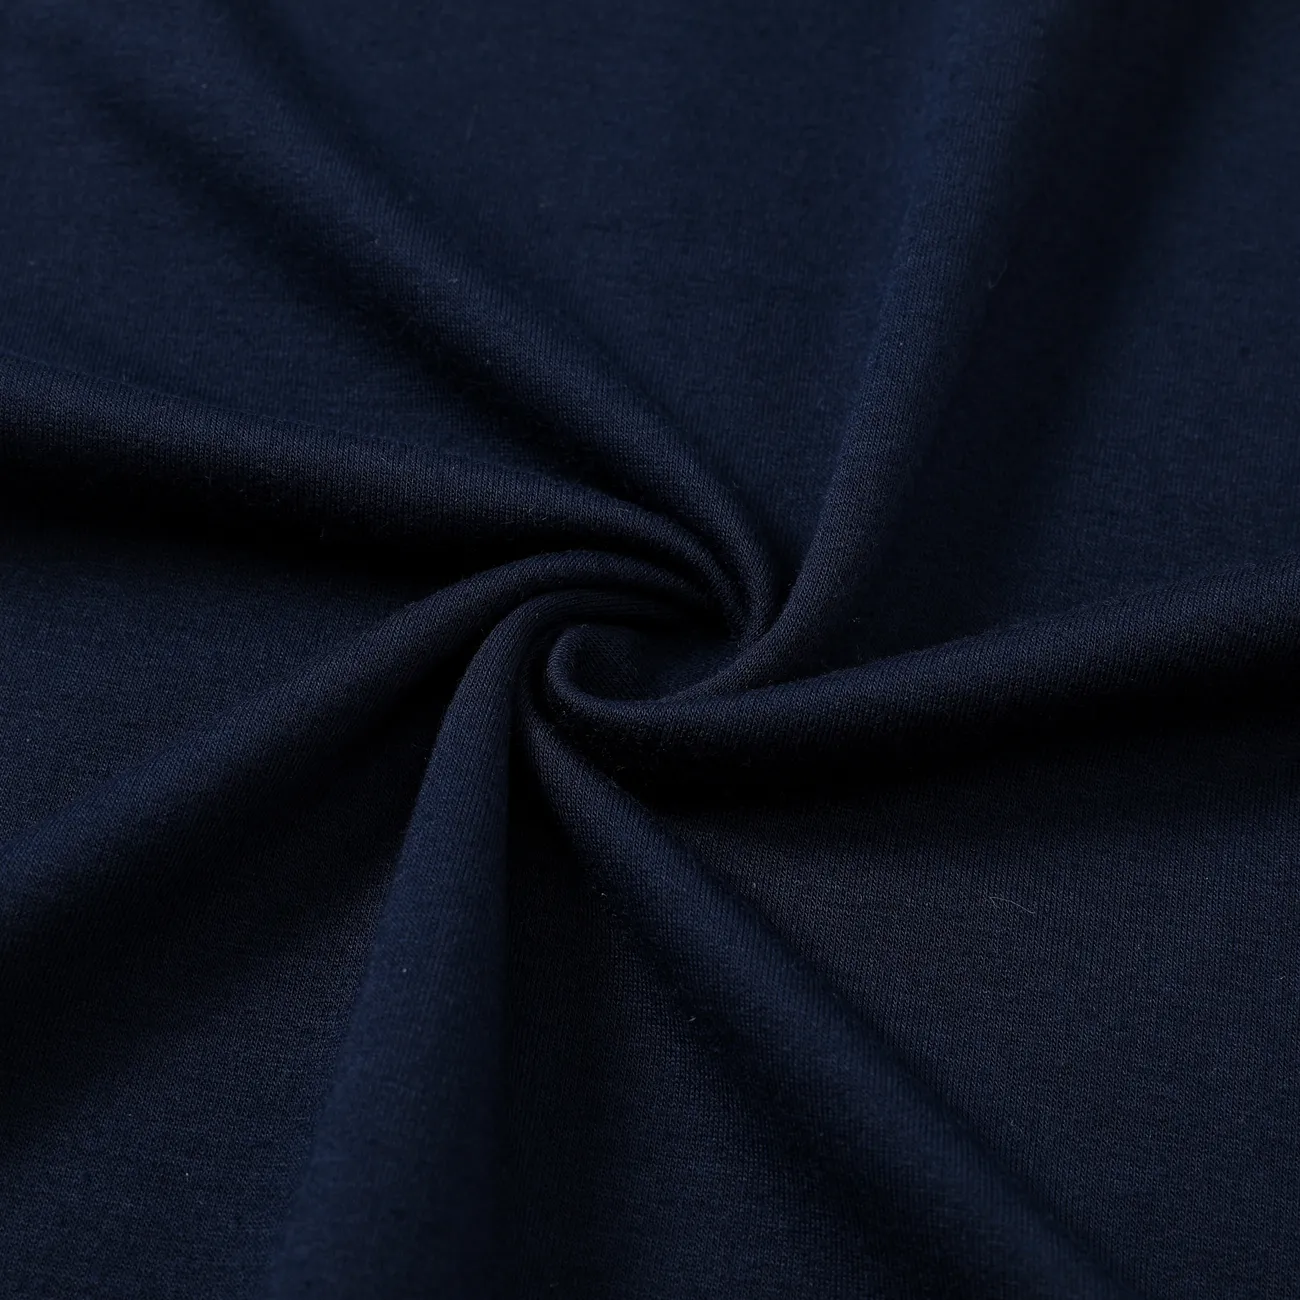 Kid Boy Solide et tissu couture Sweatshirt/Chaussures/Pantalon bleu profond big image 1